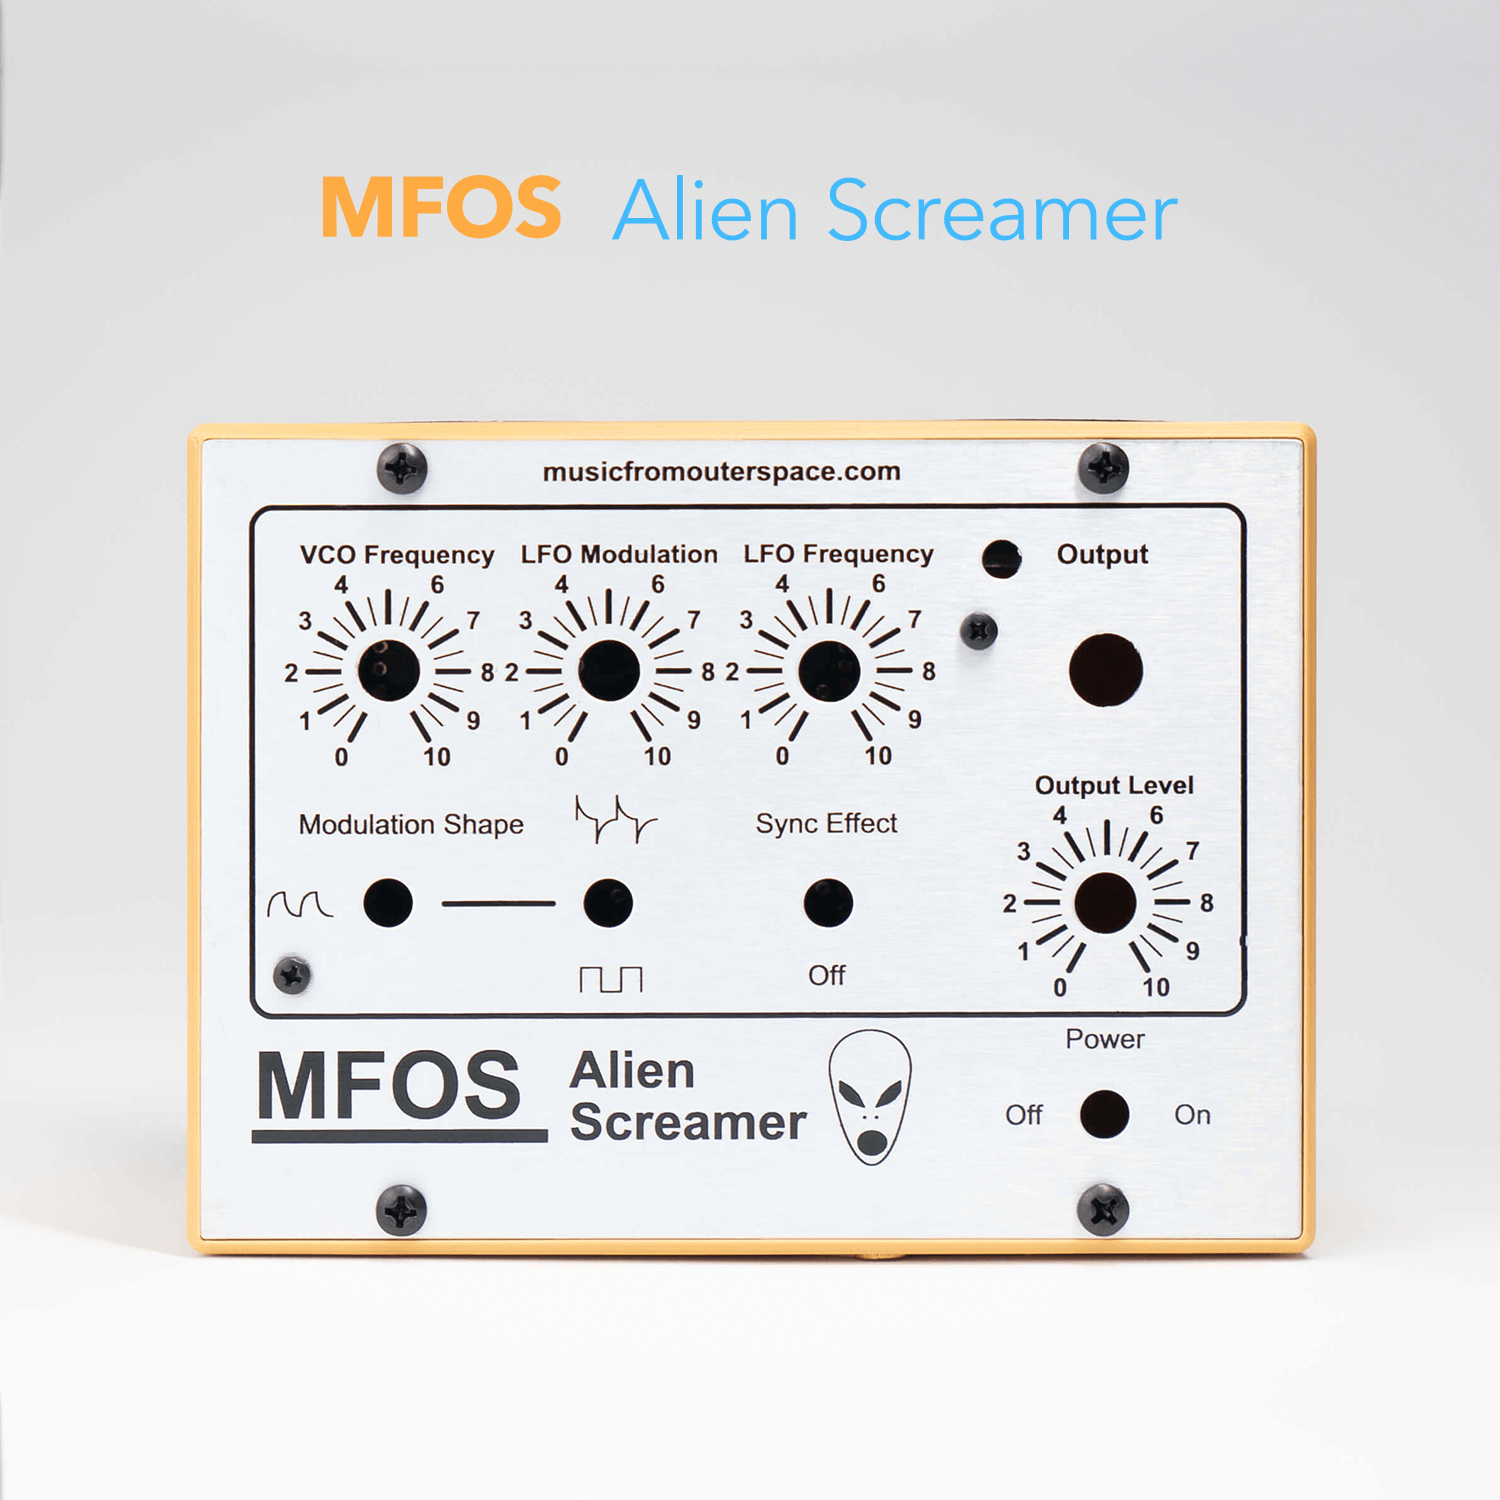 MFOS Alien Screamer